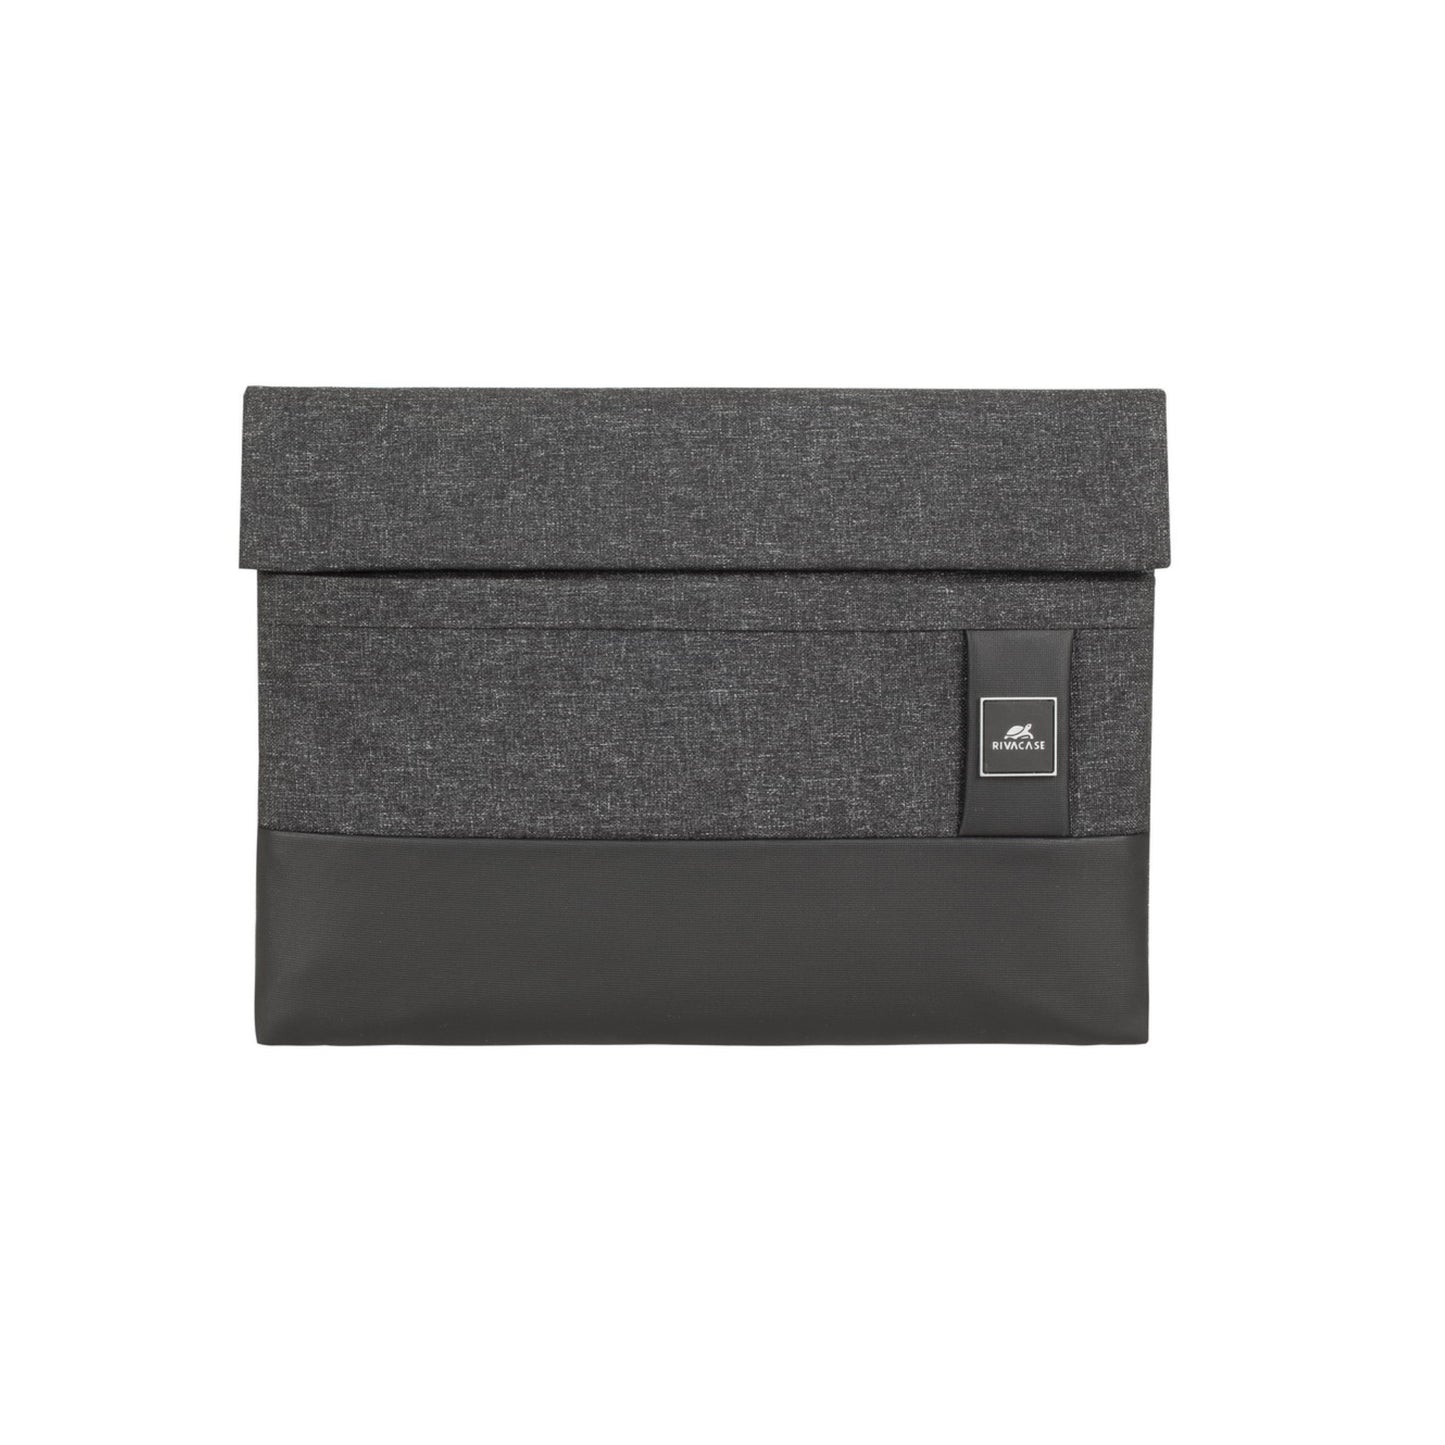 RIVACASE 8805 Lantau Laptop Sleeves 16inch - Black Melange